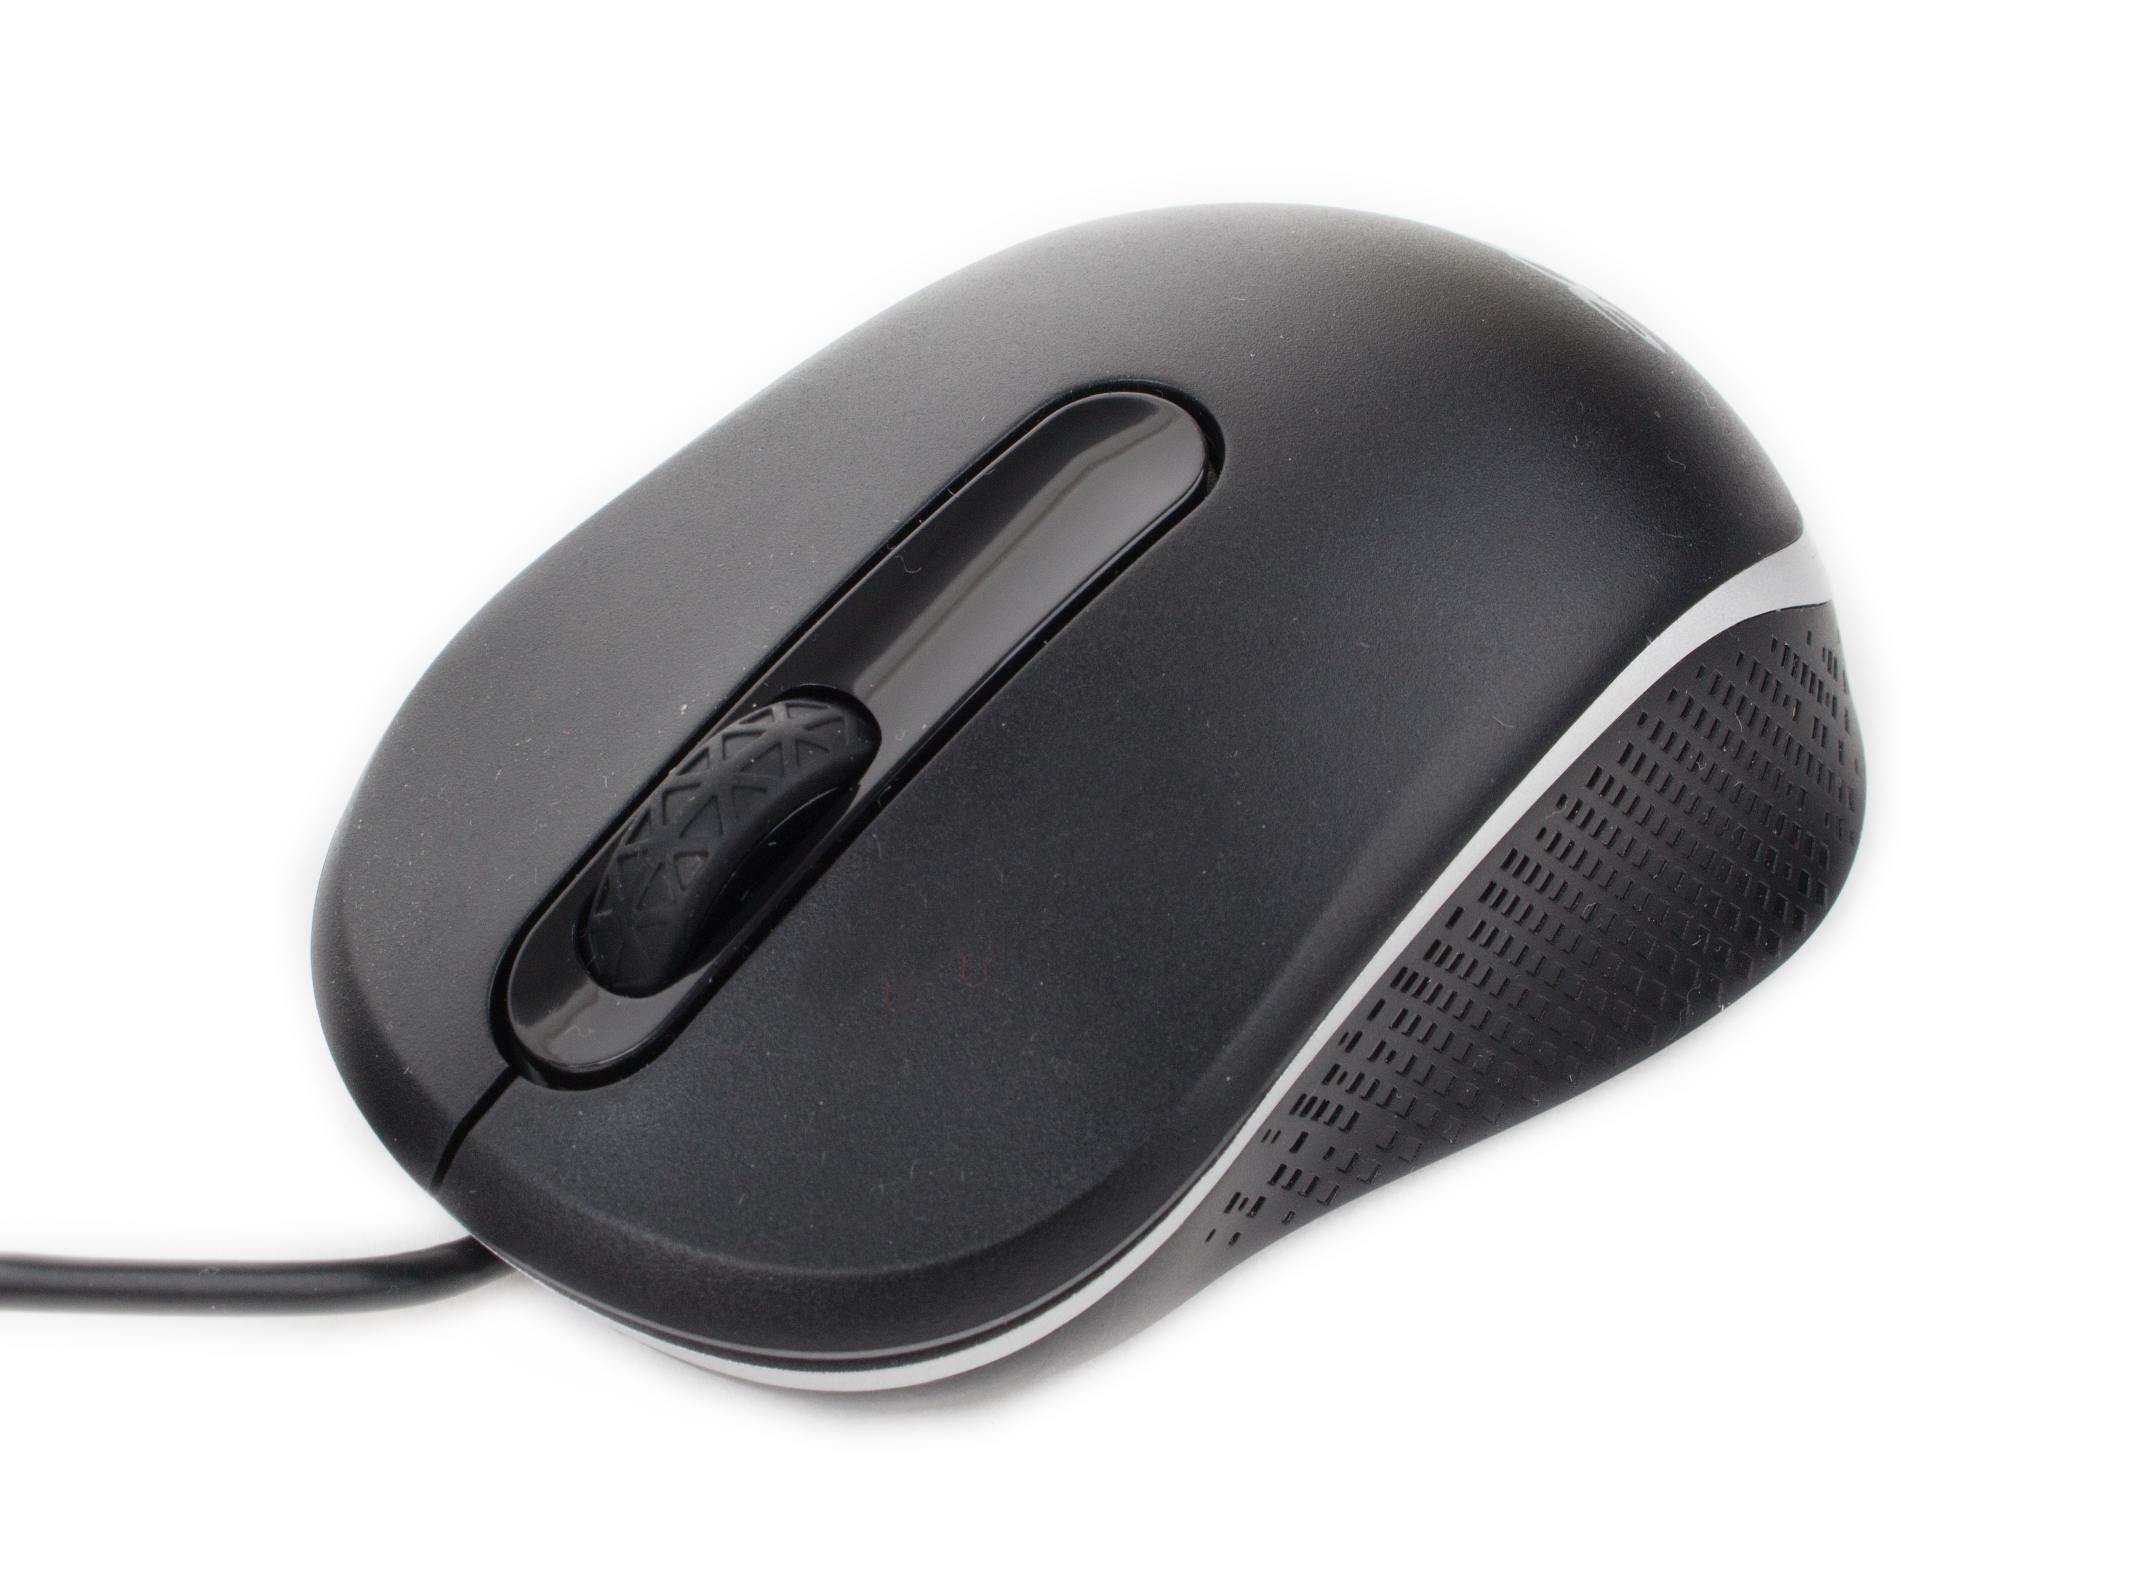 Acer Molduo myš